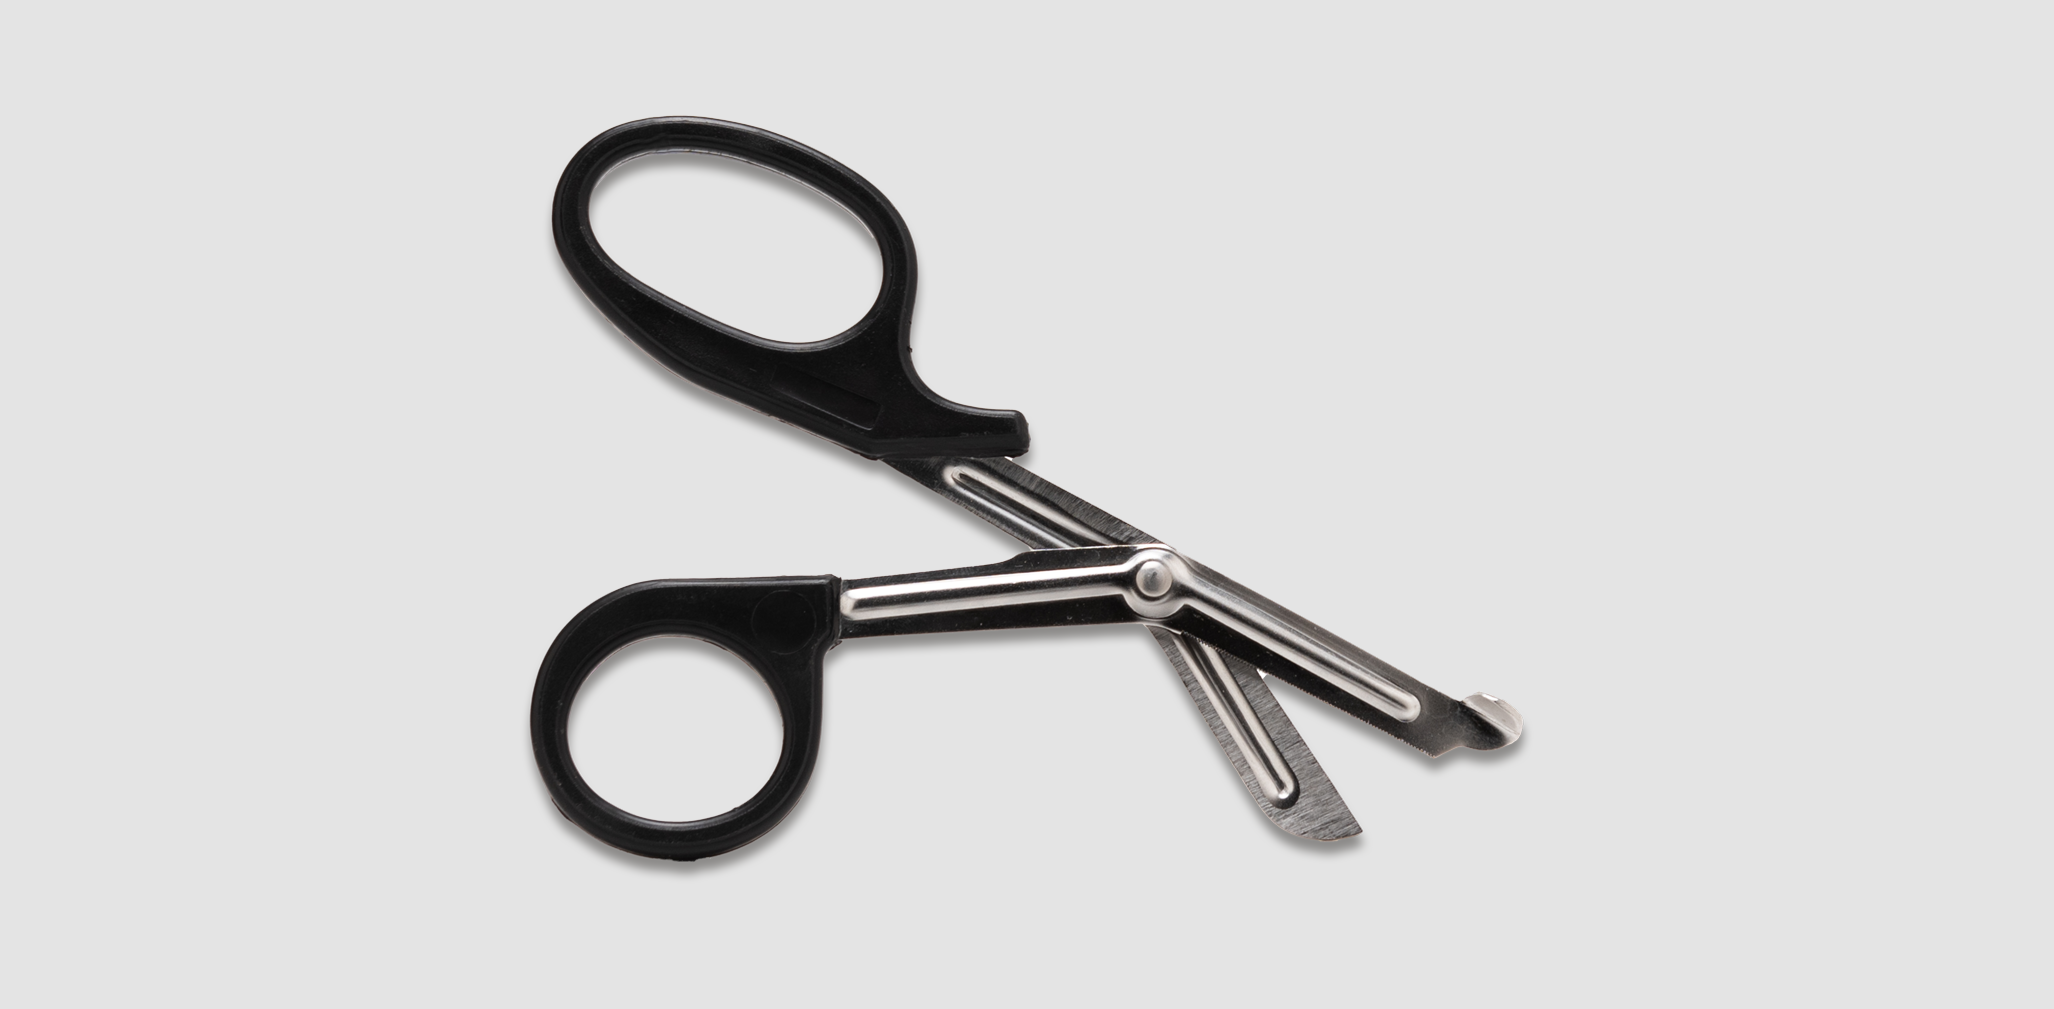 Band & tubing scissors